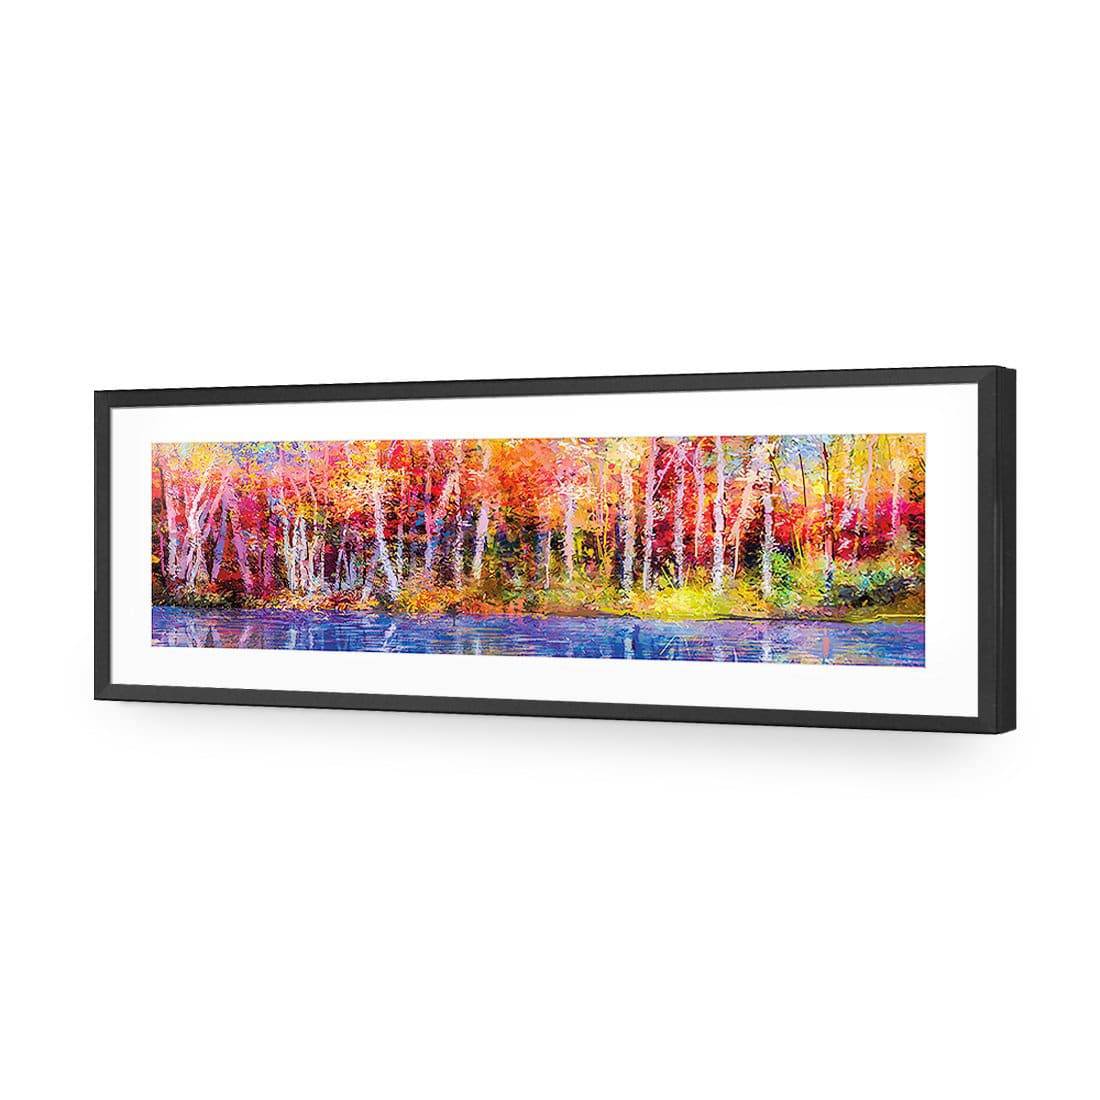 Rainbow Tree Forest, Long-Acrylic-Wall Art Design-With Border-Acrylic - Black Frame-60x20cm-Wall Art Designs